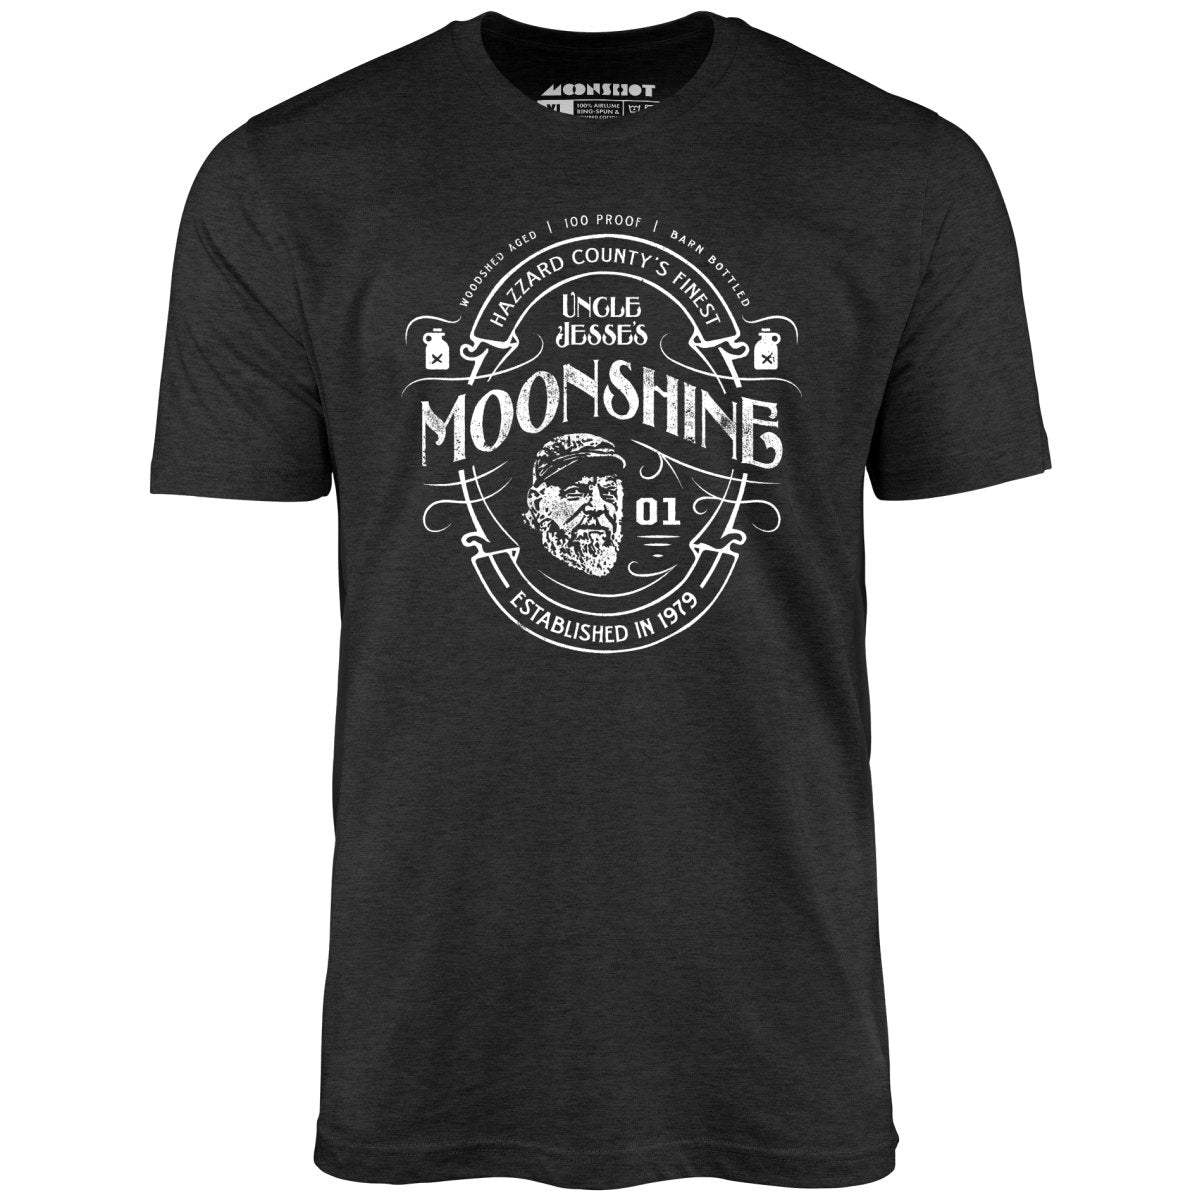 Uncle Jesse's Moonshine - Unisex T-Shirt